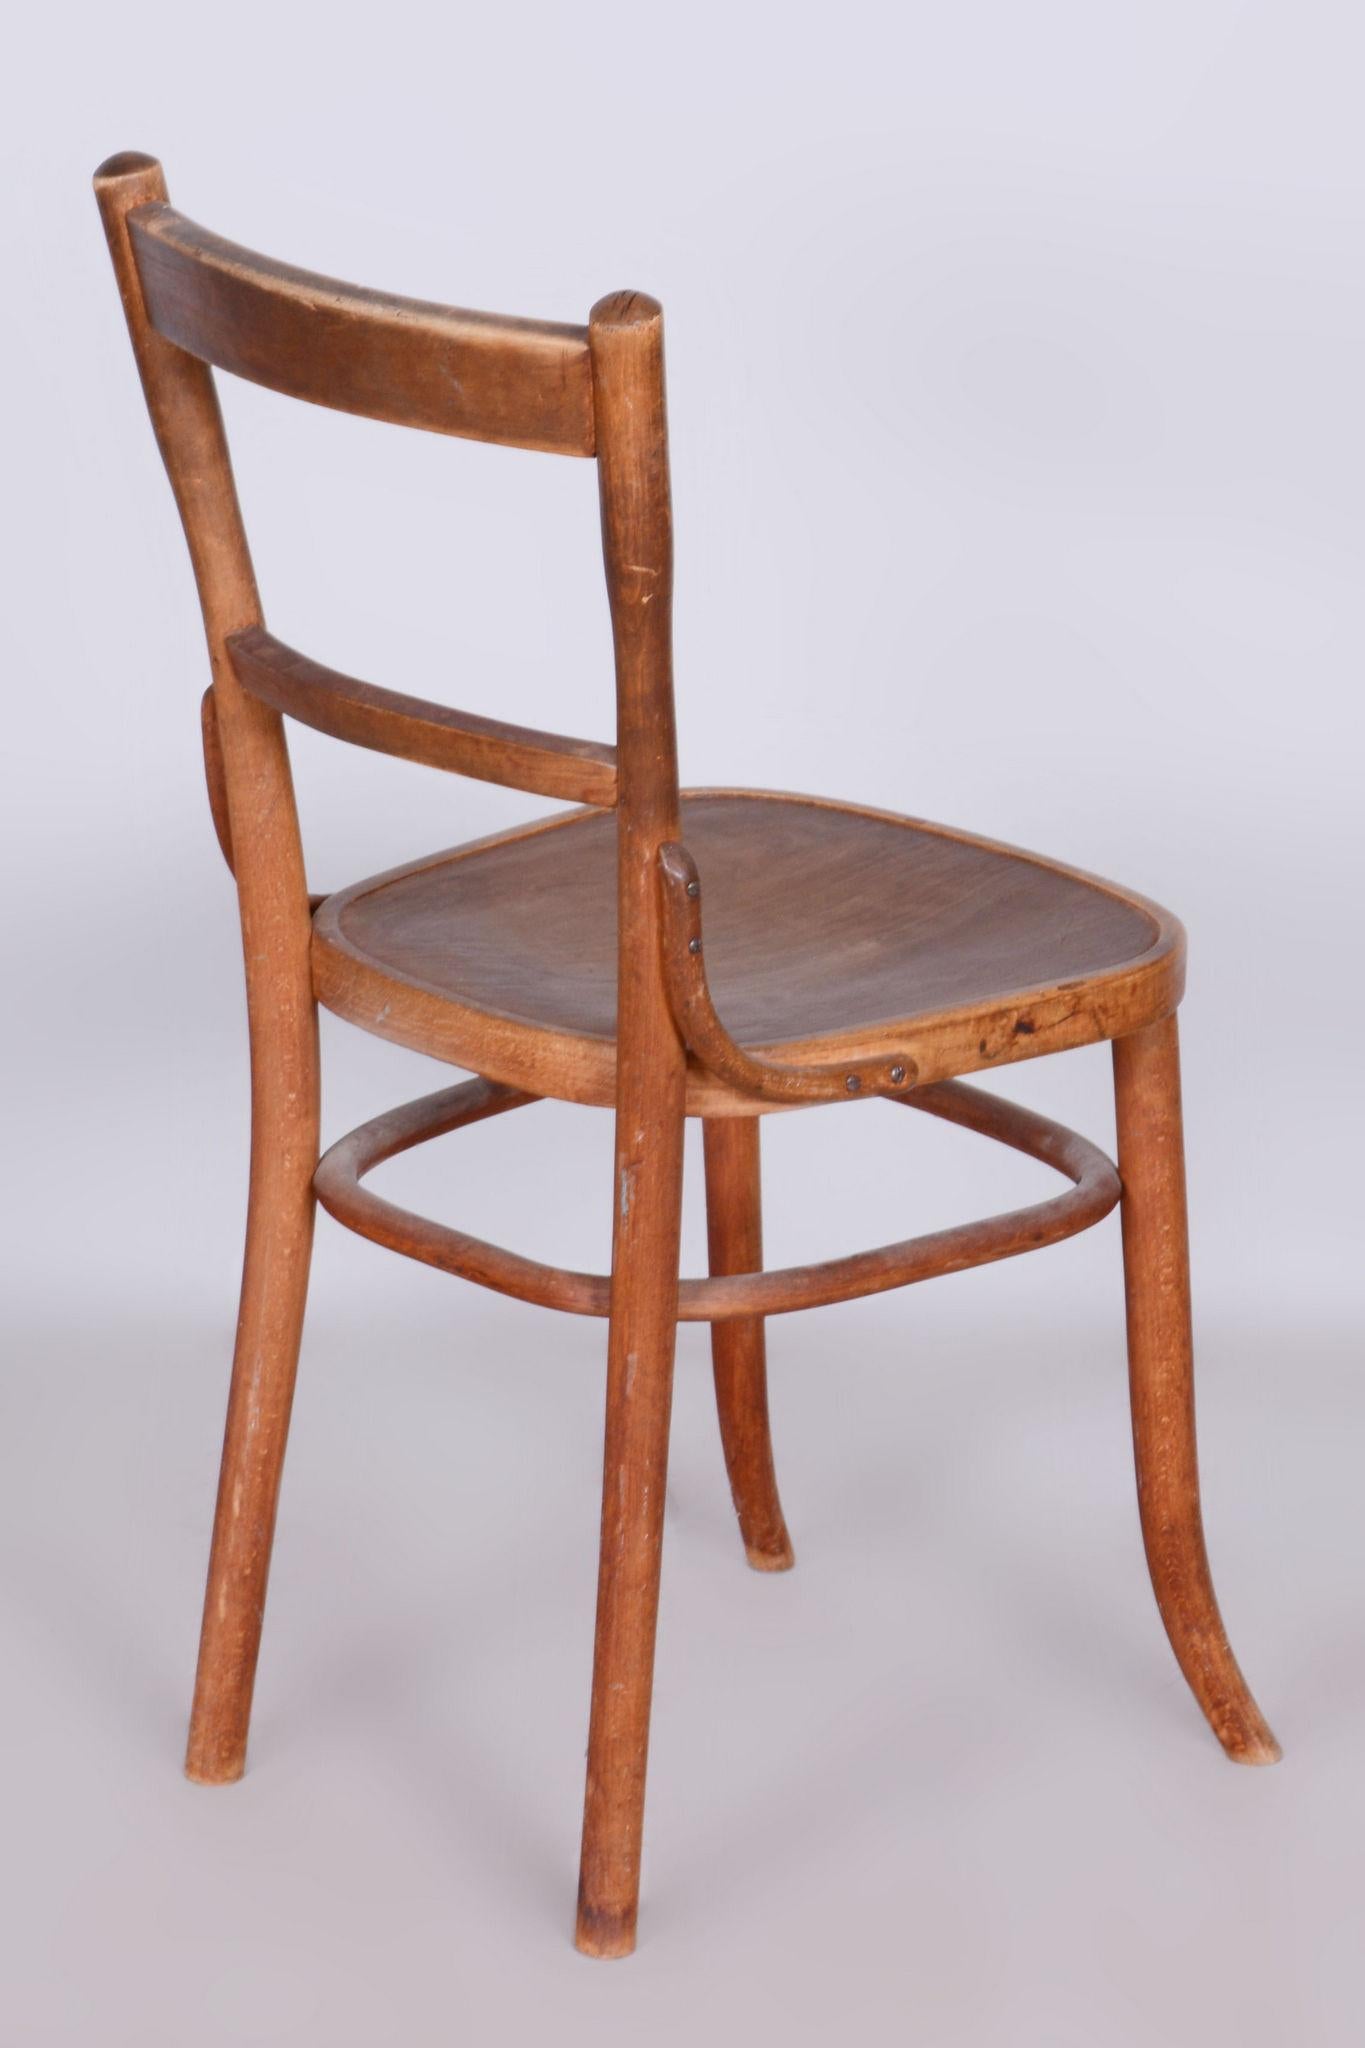 Original Art Deco Beech Chair, Fischel, Stable Construction, Czechia, 1920s In Good Condition For Sale In Horomerice, CZ